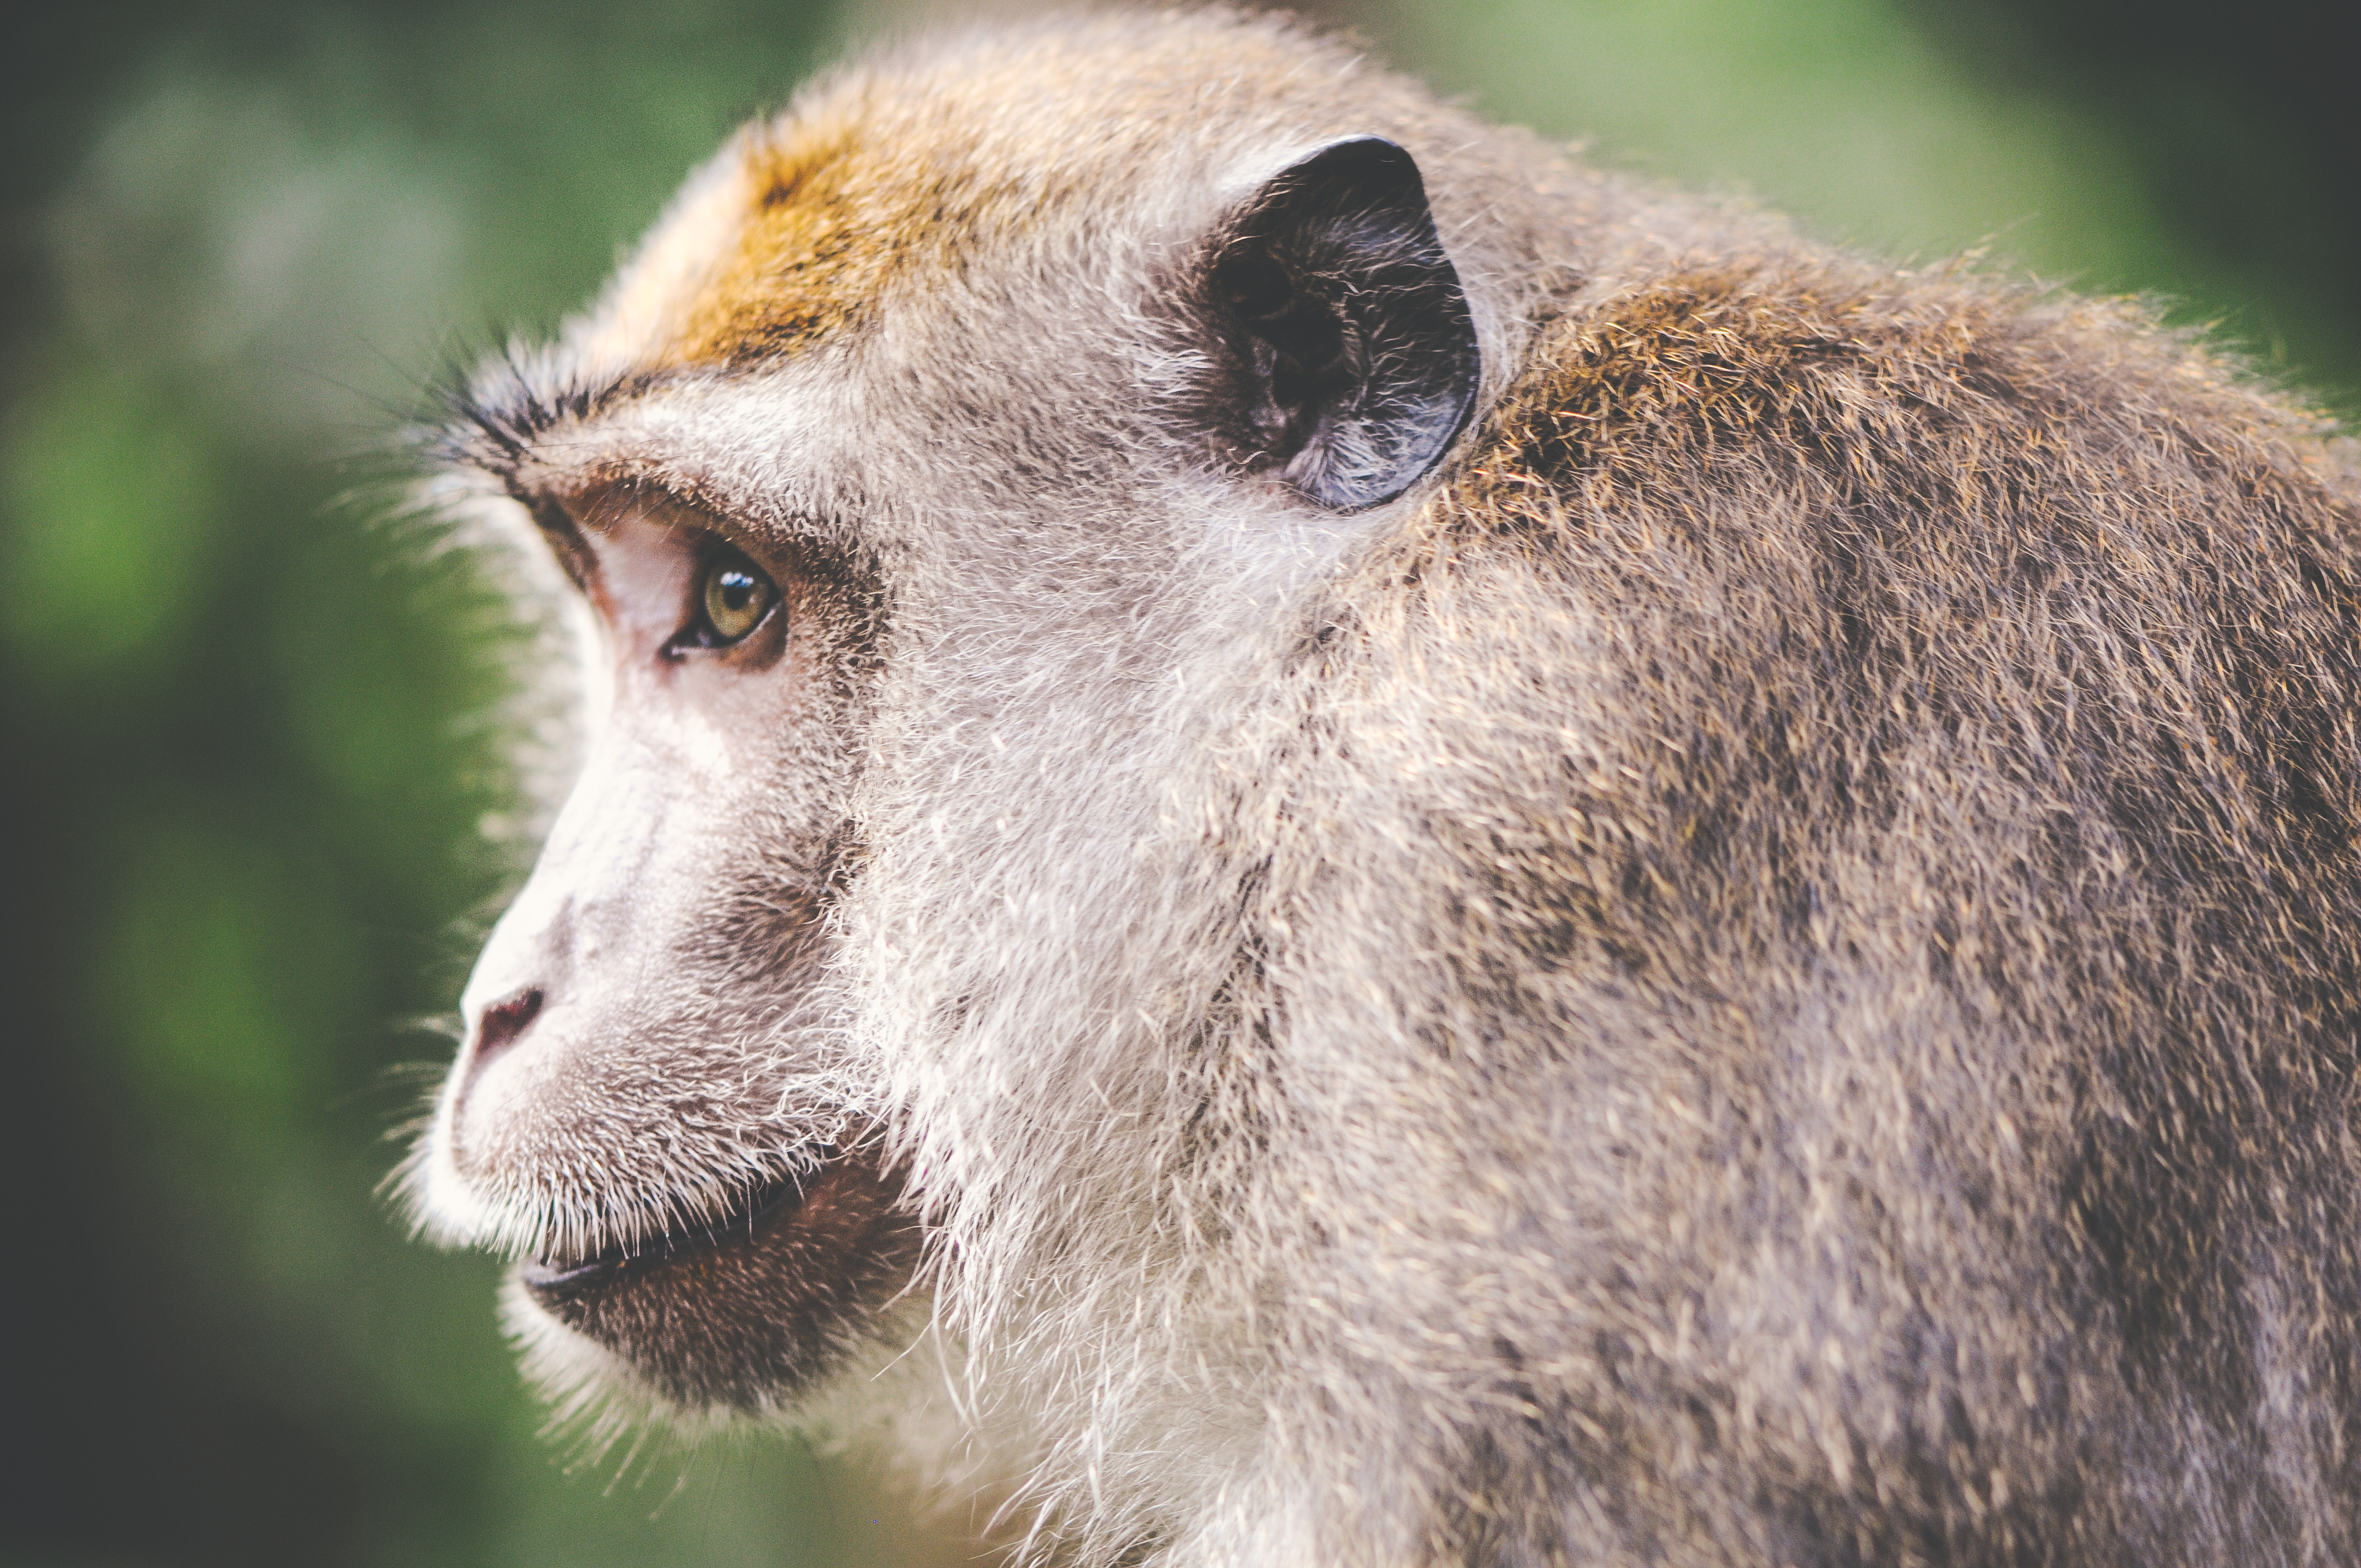 File:Animal-wilderness-zoo-monkey (23698975643).jpg - Wikimedia Commons